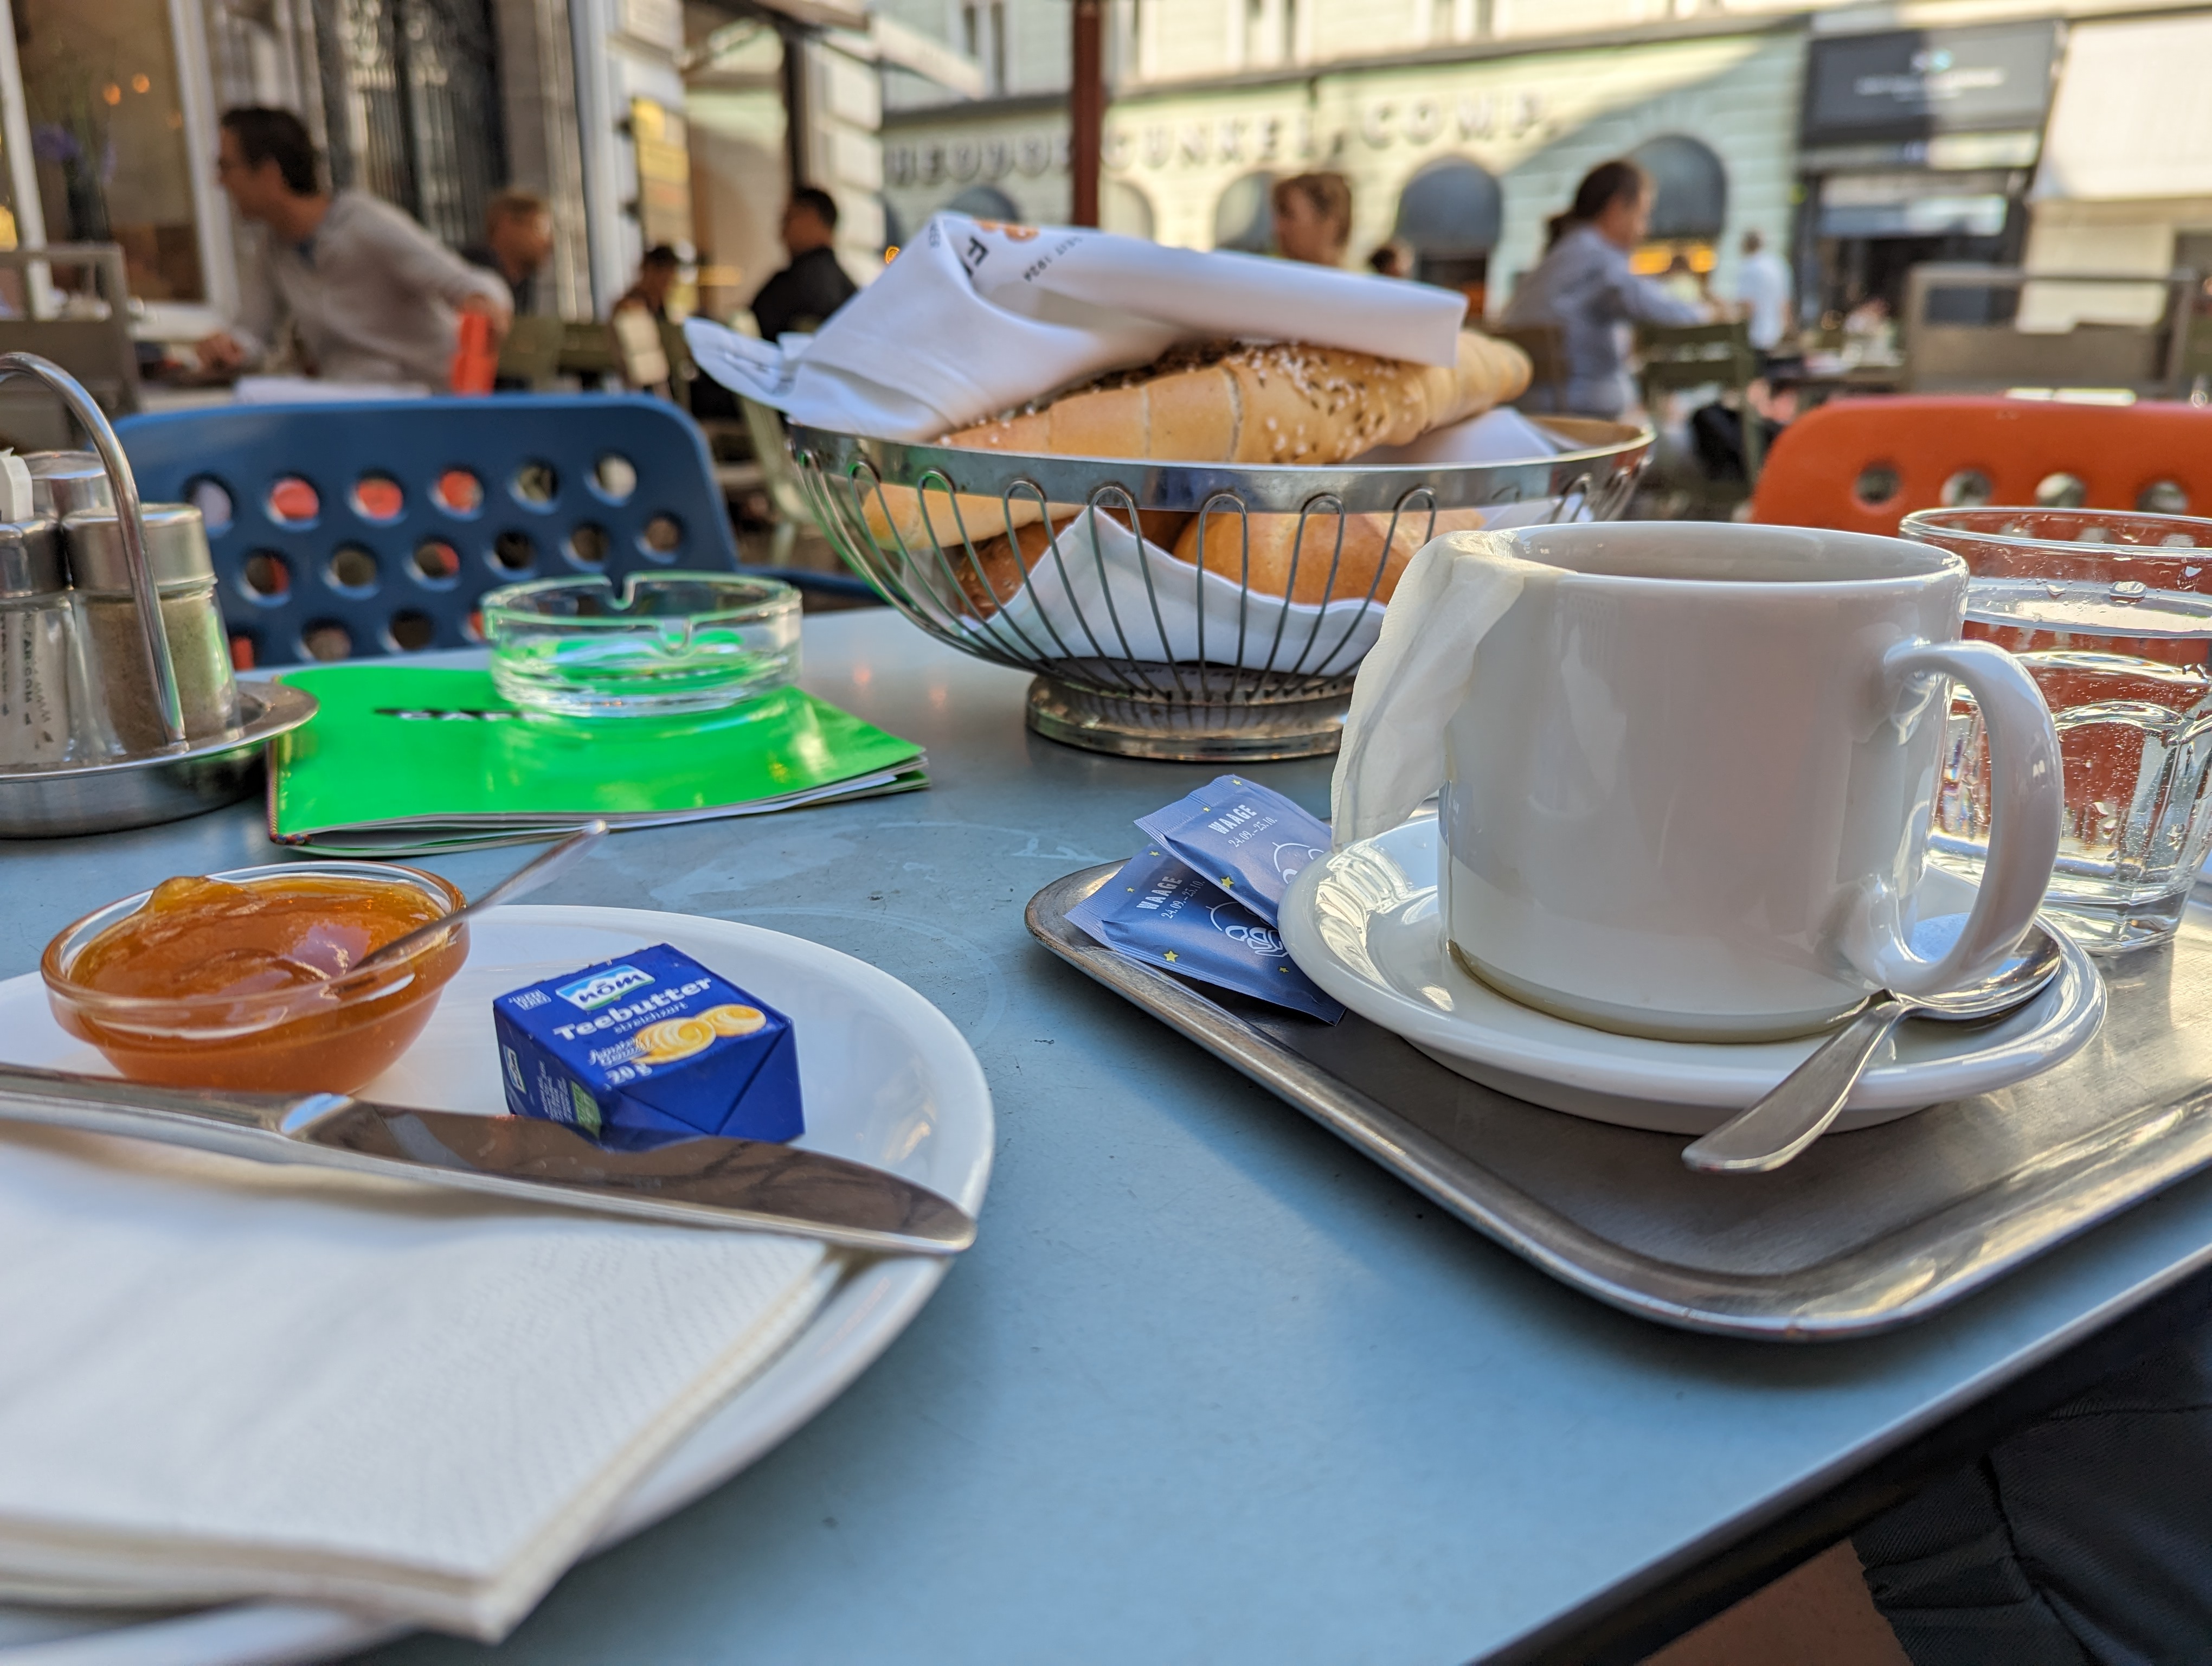 Café Korb, breakfast